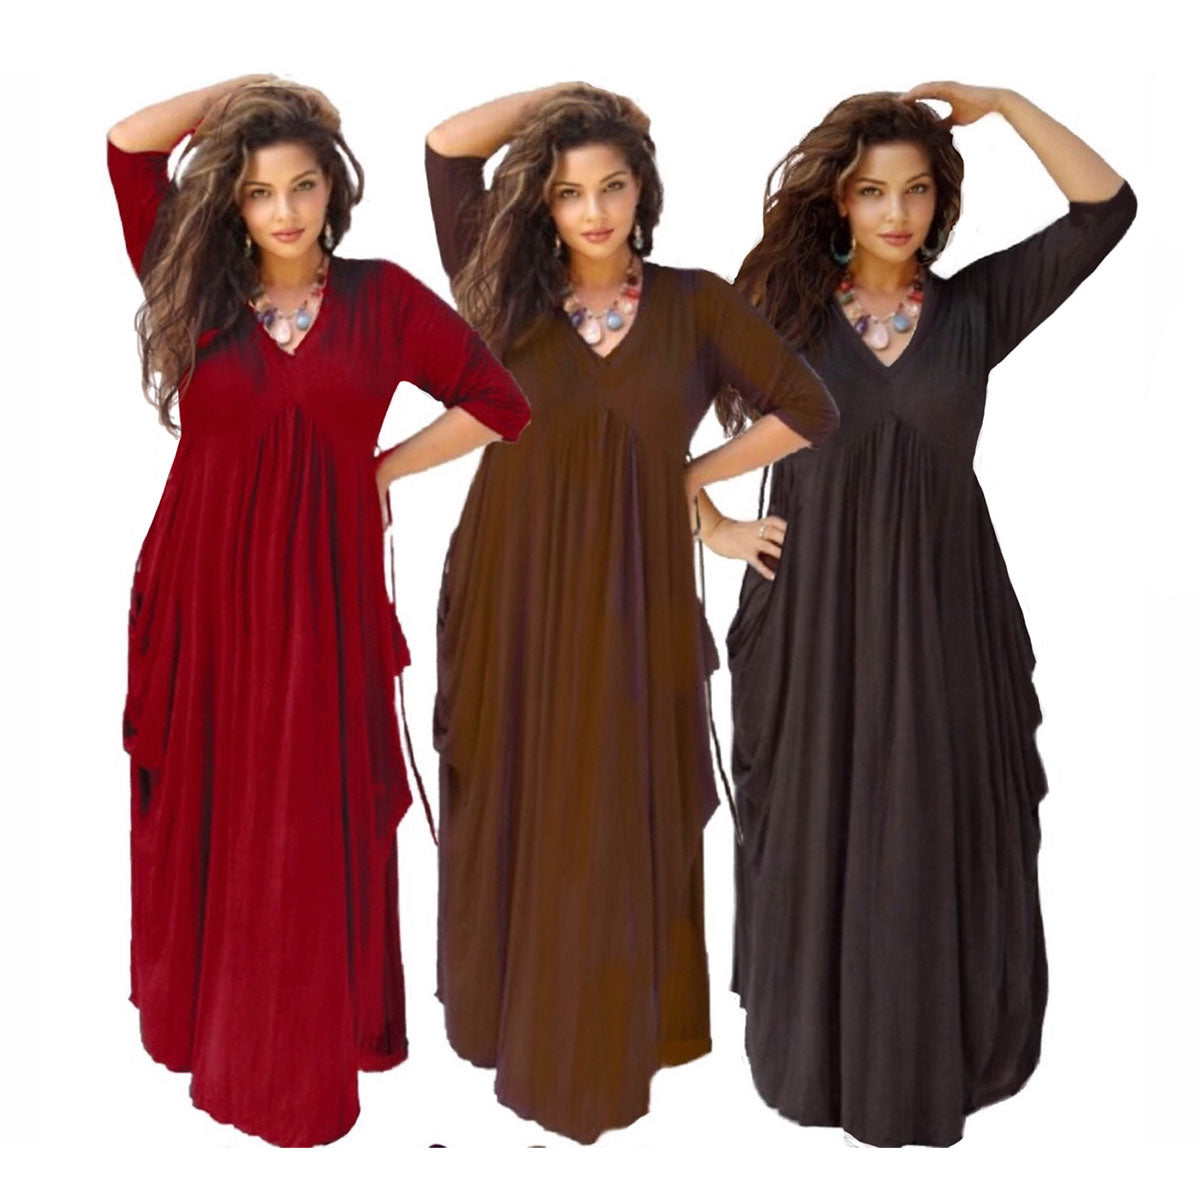 Kynlee Renaissance Delicate Rayon Lycra Boho Dress - The Bohemian Closet